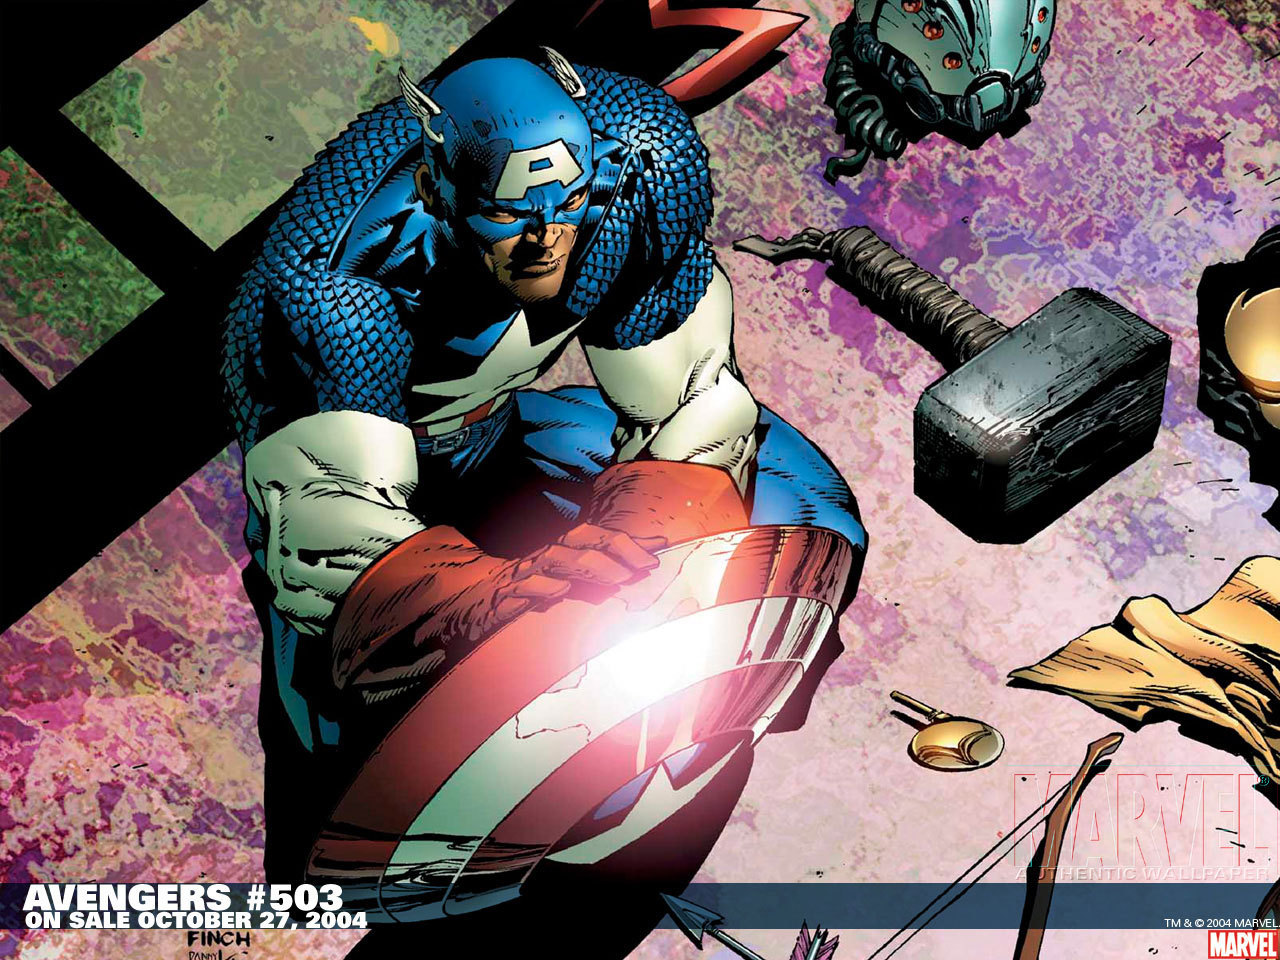 The Mandalorian vs Captain America